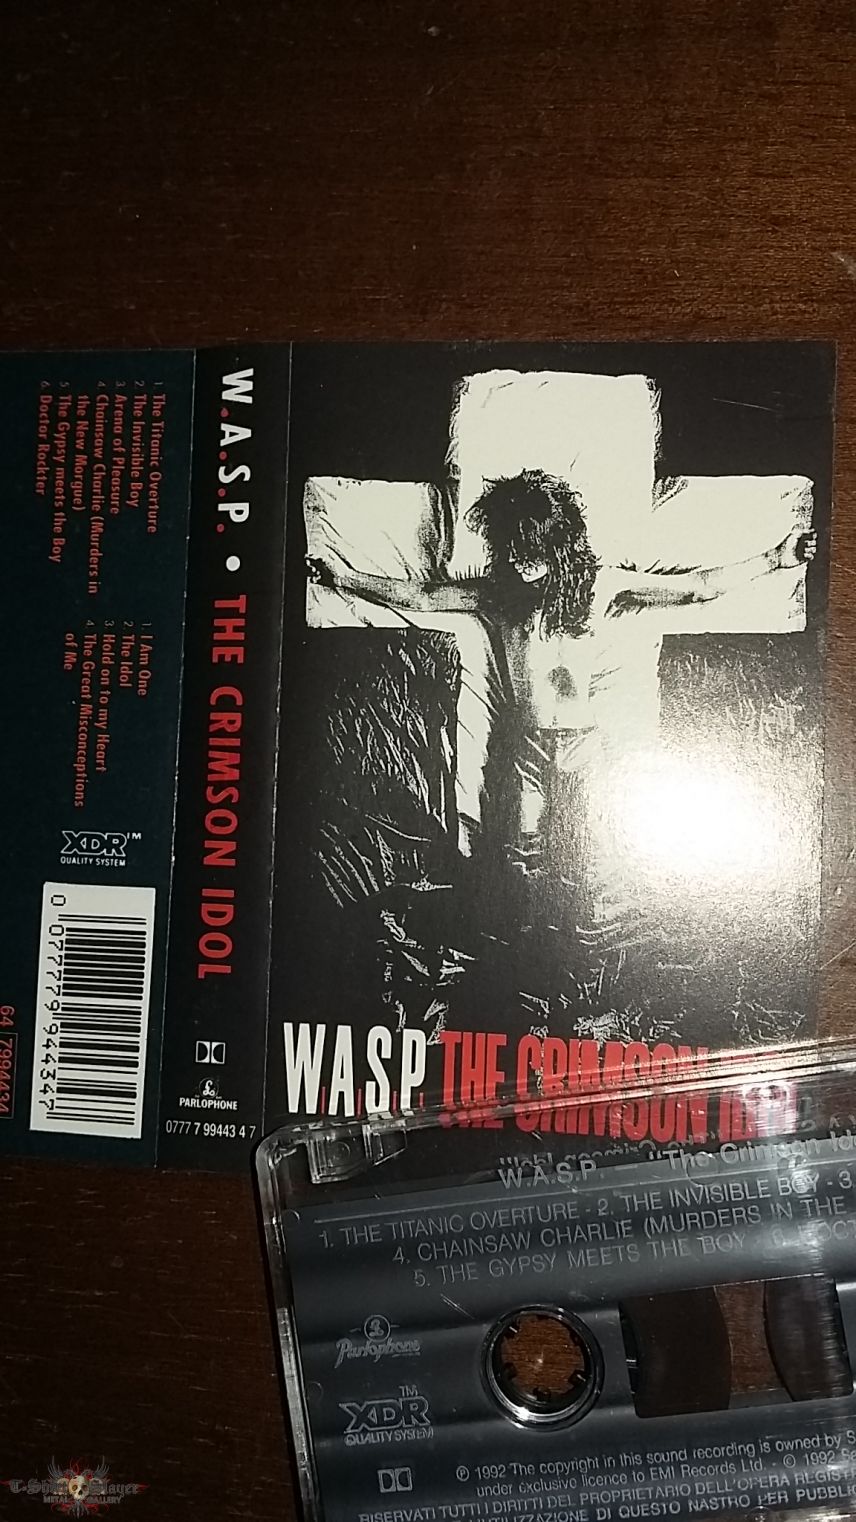 W.A.S.P. WASP - The Crimson Idol